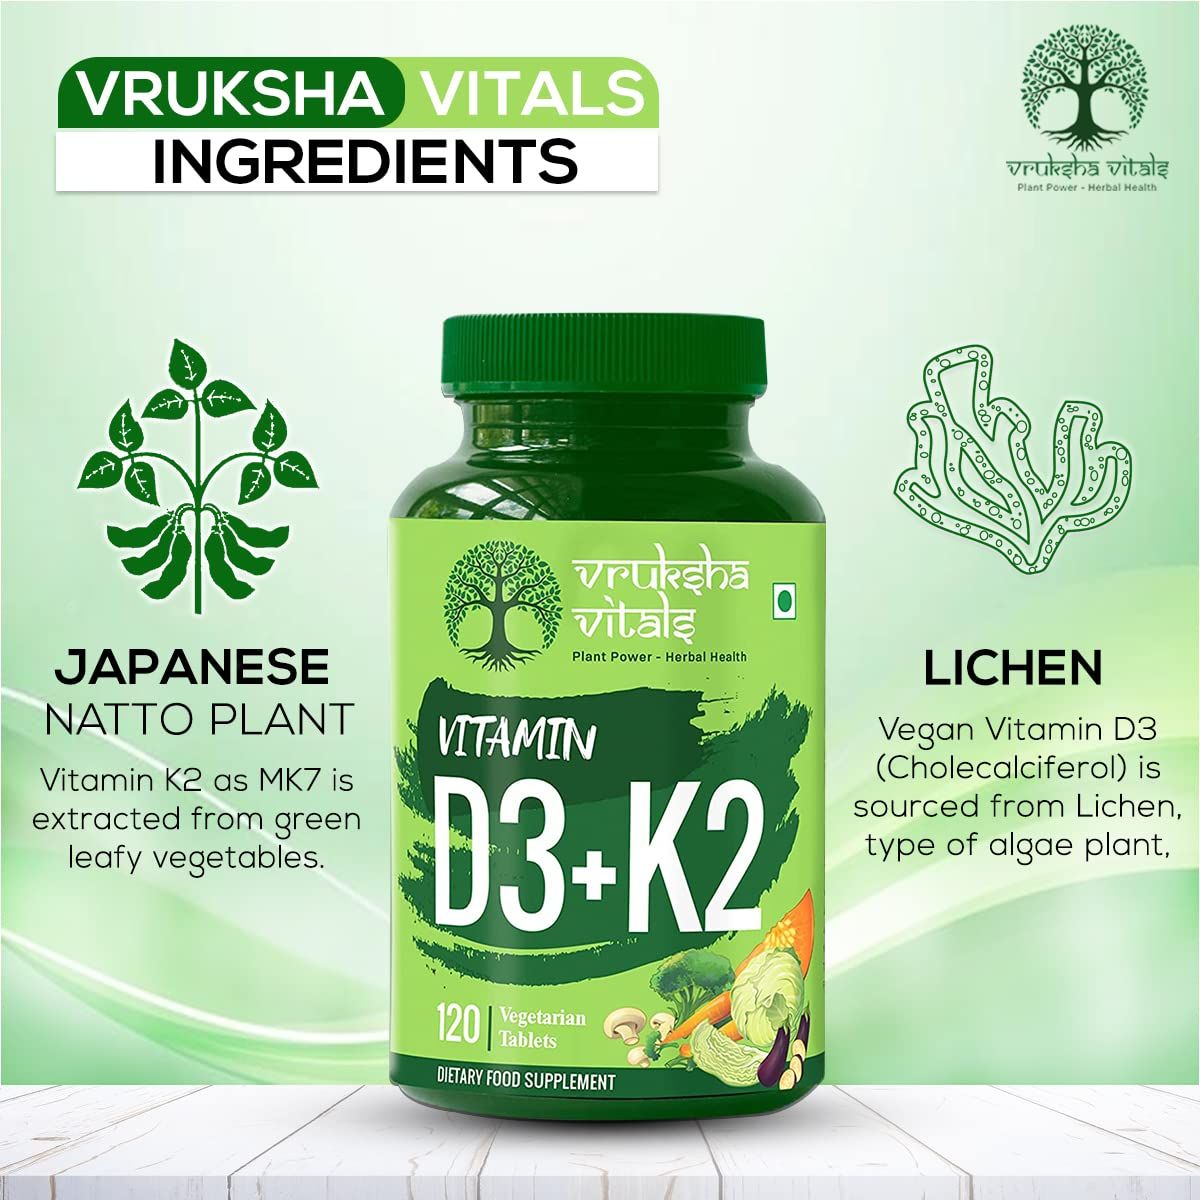 Vruksha Vitals Vitamin D3 + K2 Image